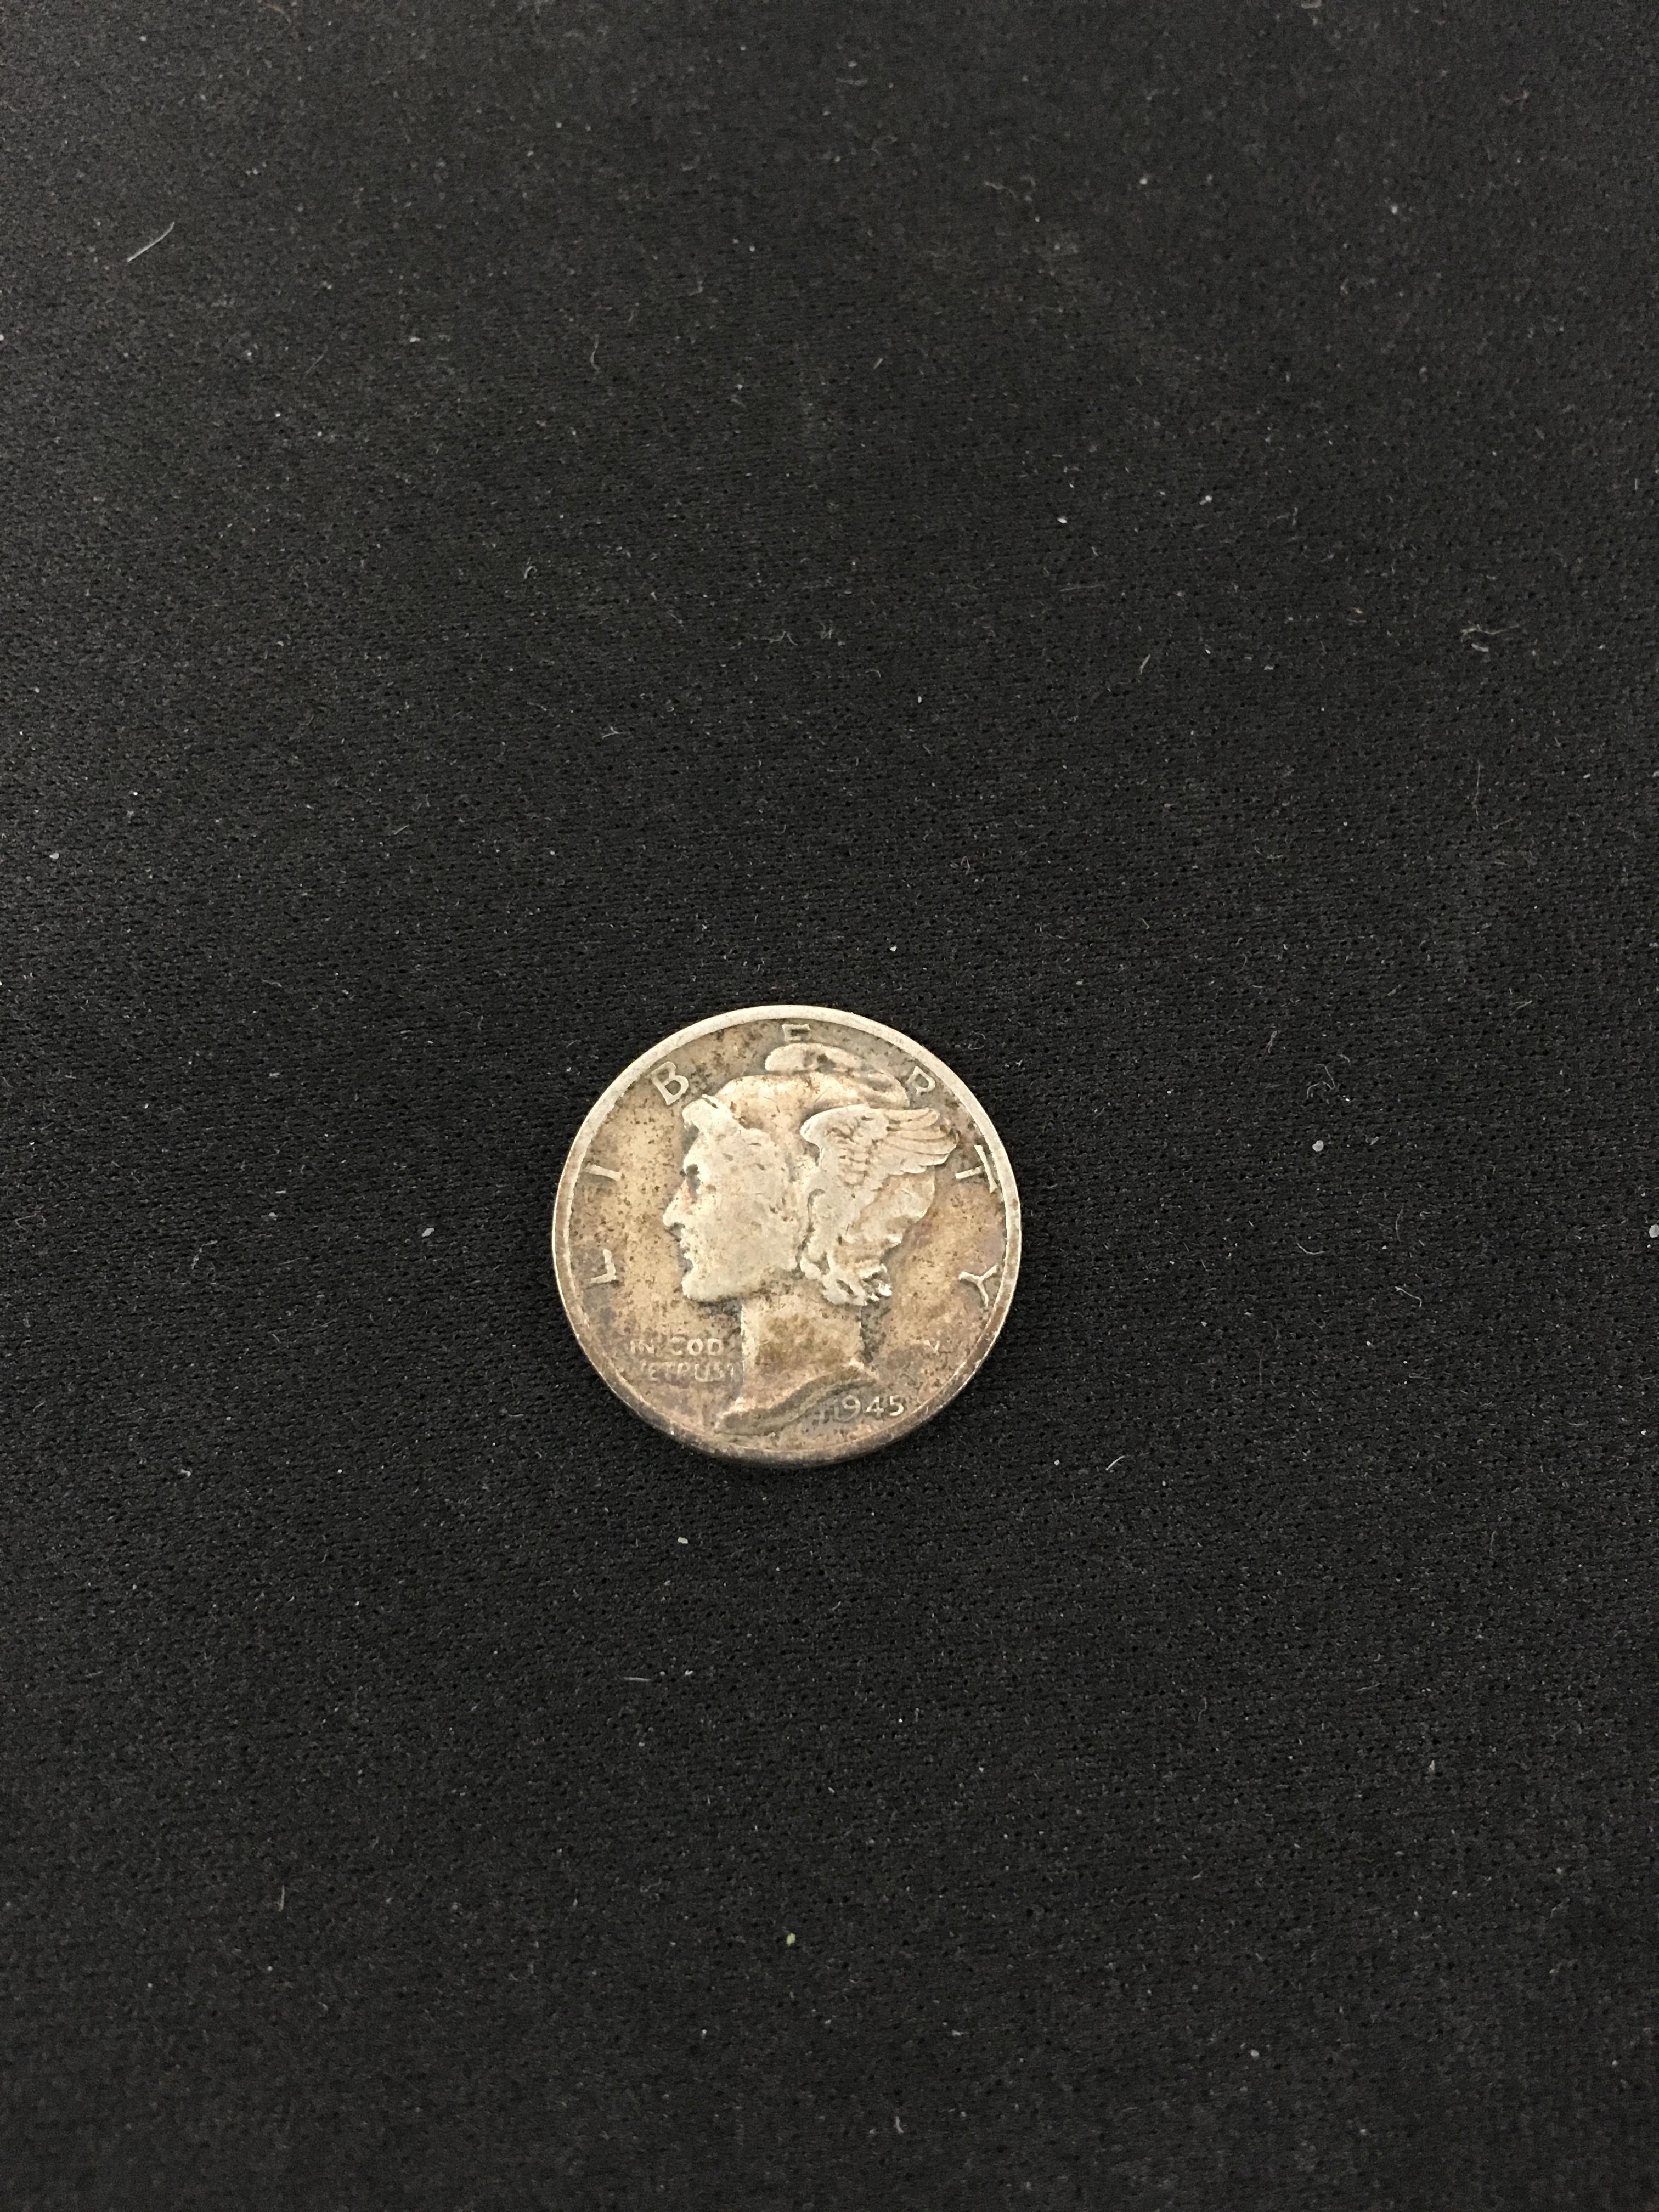 1945-S United States Mercury Silver Dime - 90% Silver Coin